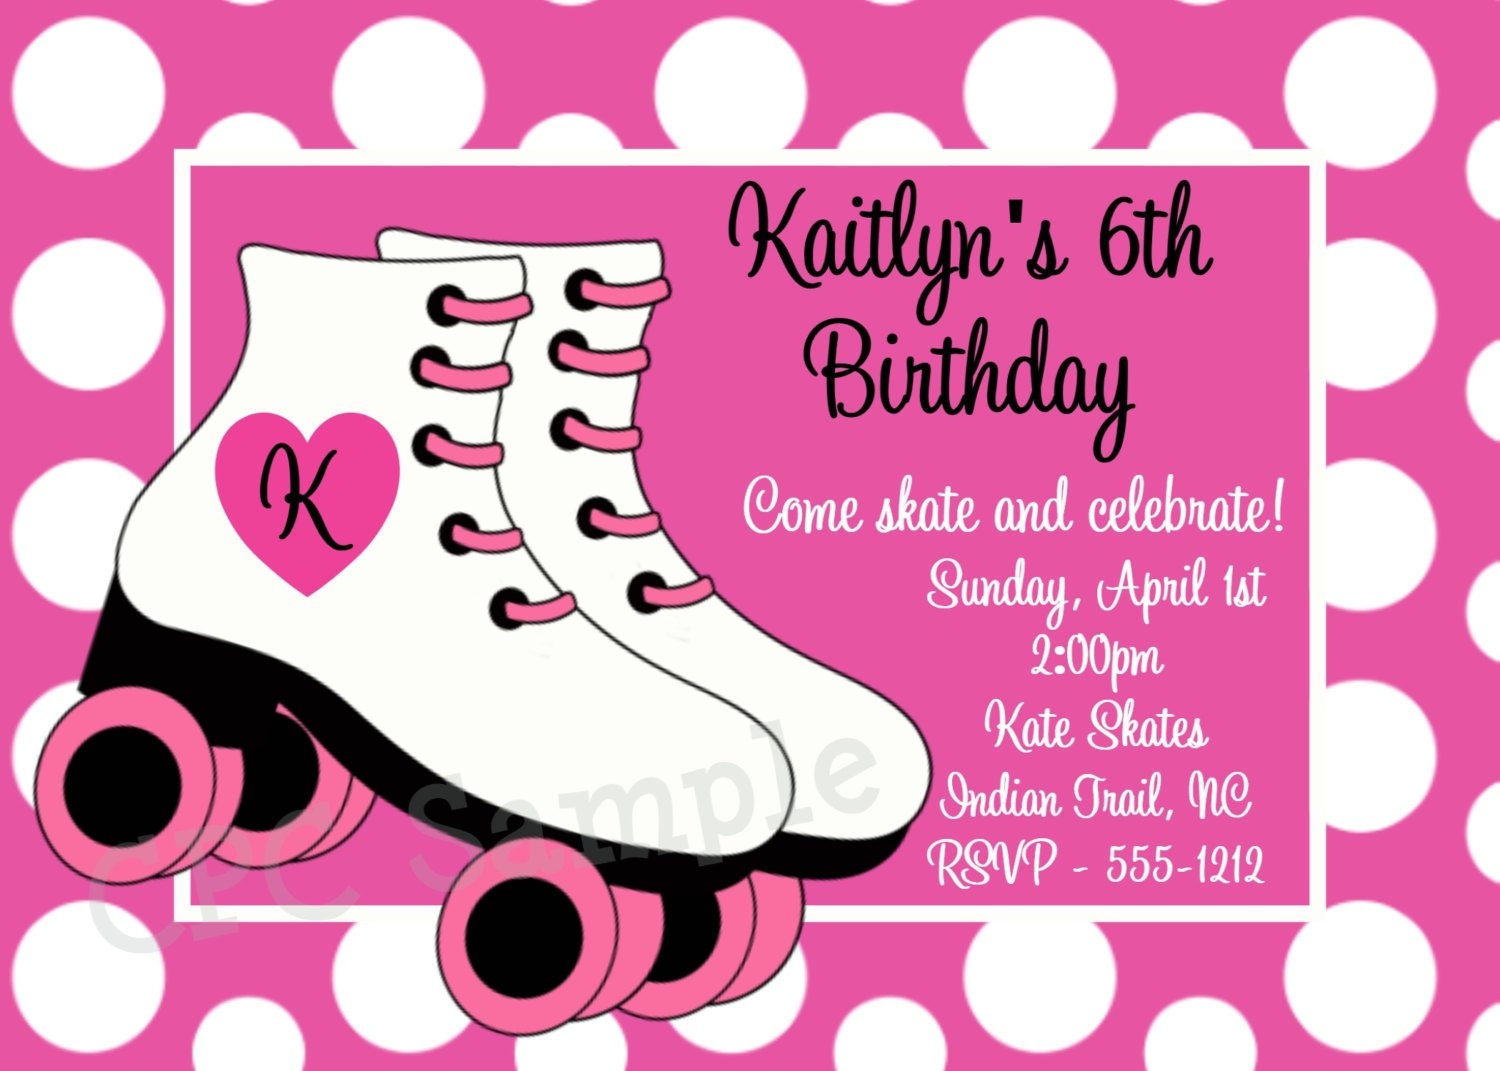 Skate Party Invitation Template. Party Invitations Free Printable - Free Printable Skateboard Birthday Party Invitations